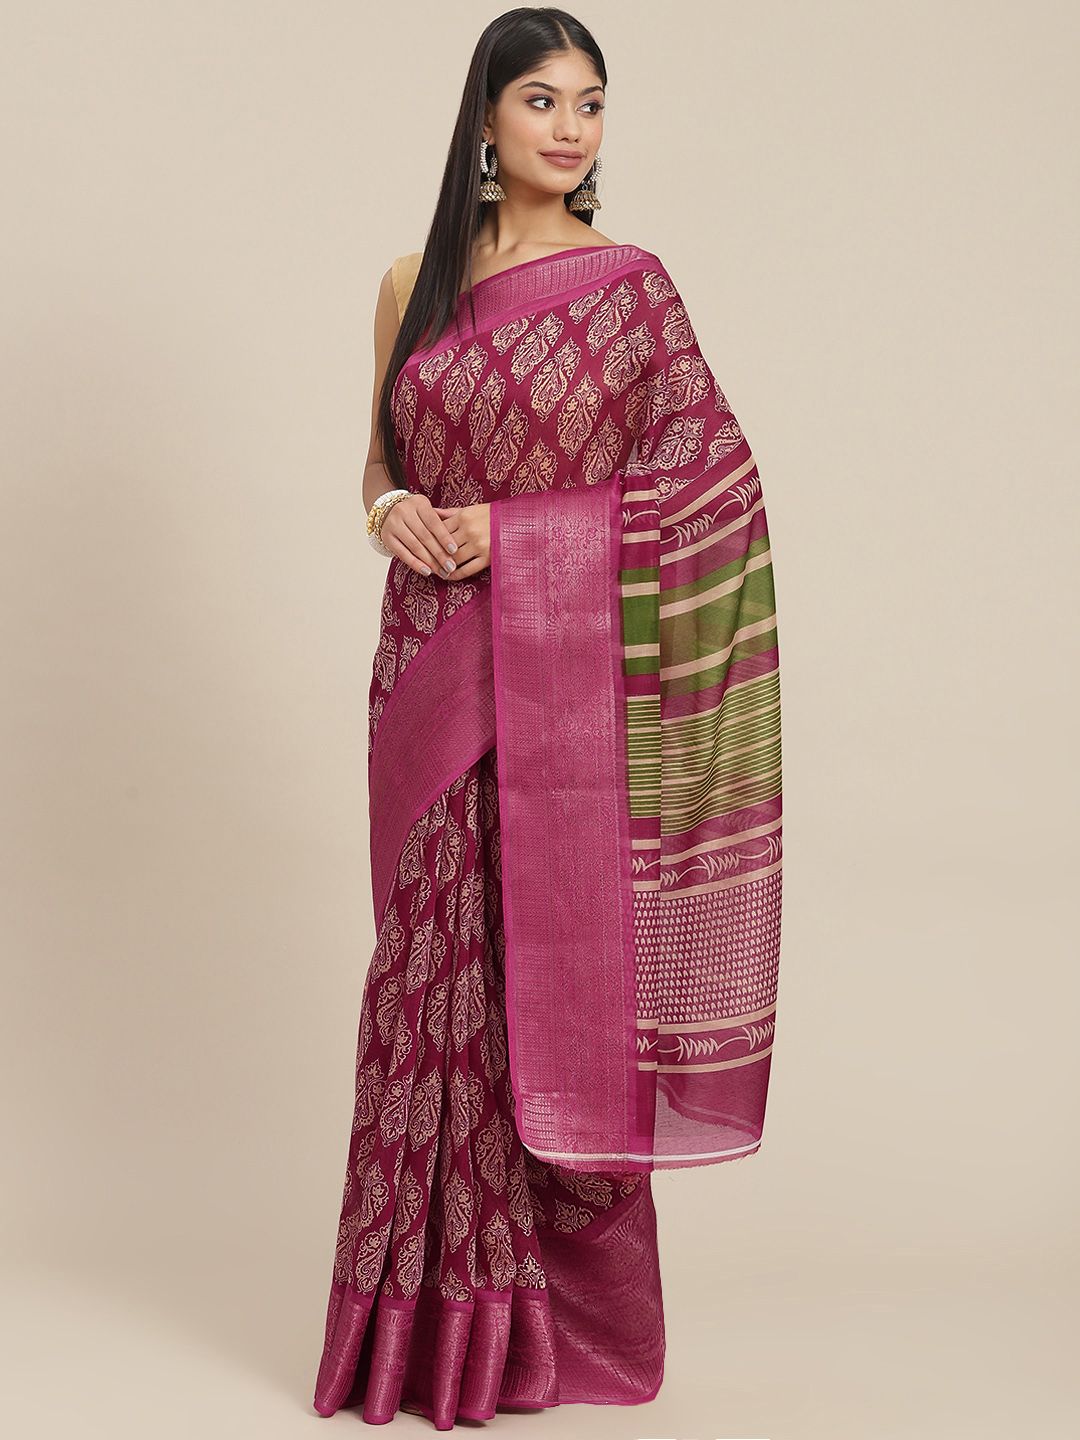 Shangrila ethnic motifs sarees - Buy Shangrila ethnic motifs sarees ...